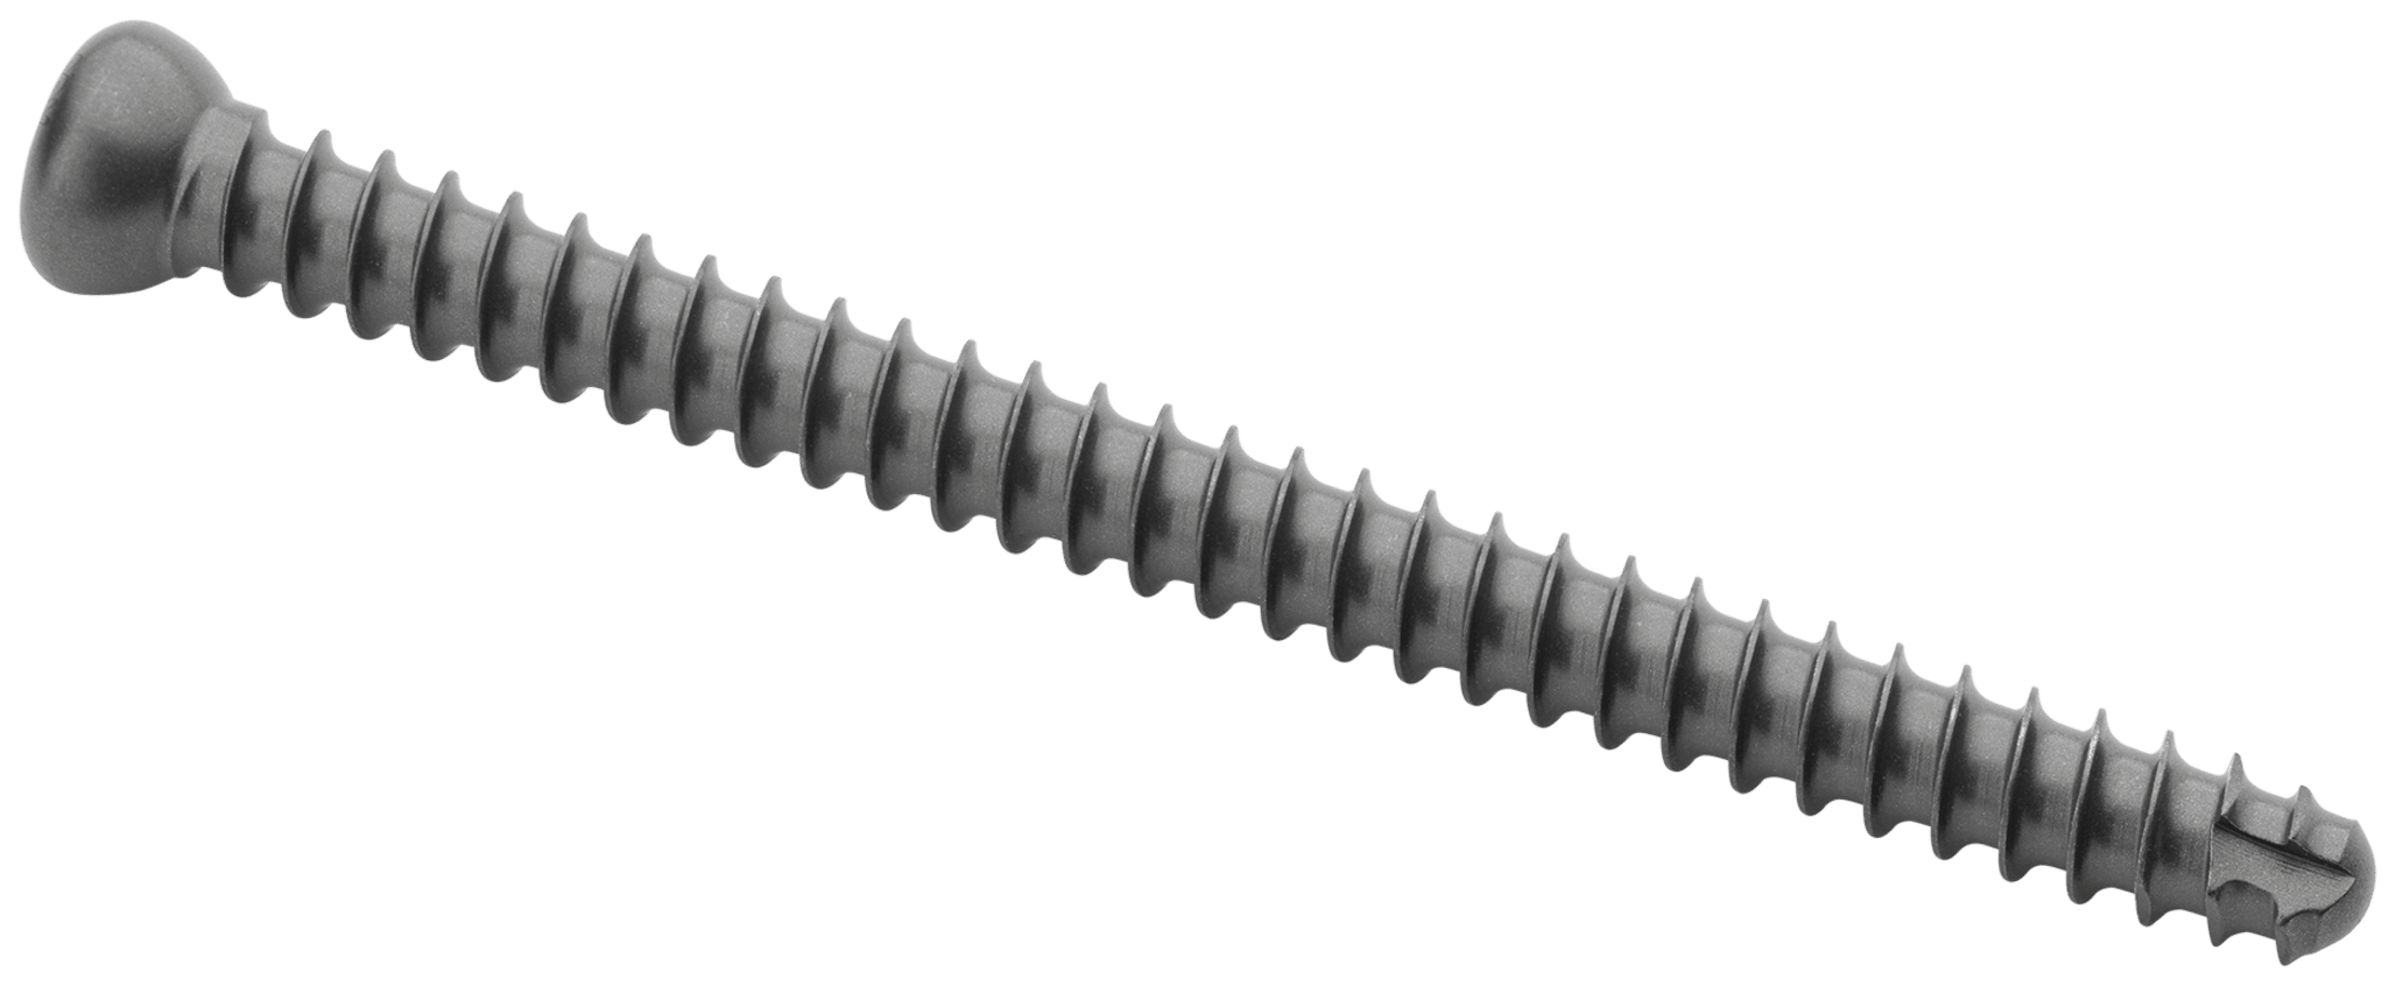 Cancellous Screw, 5.0 mm × 60 mm